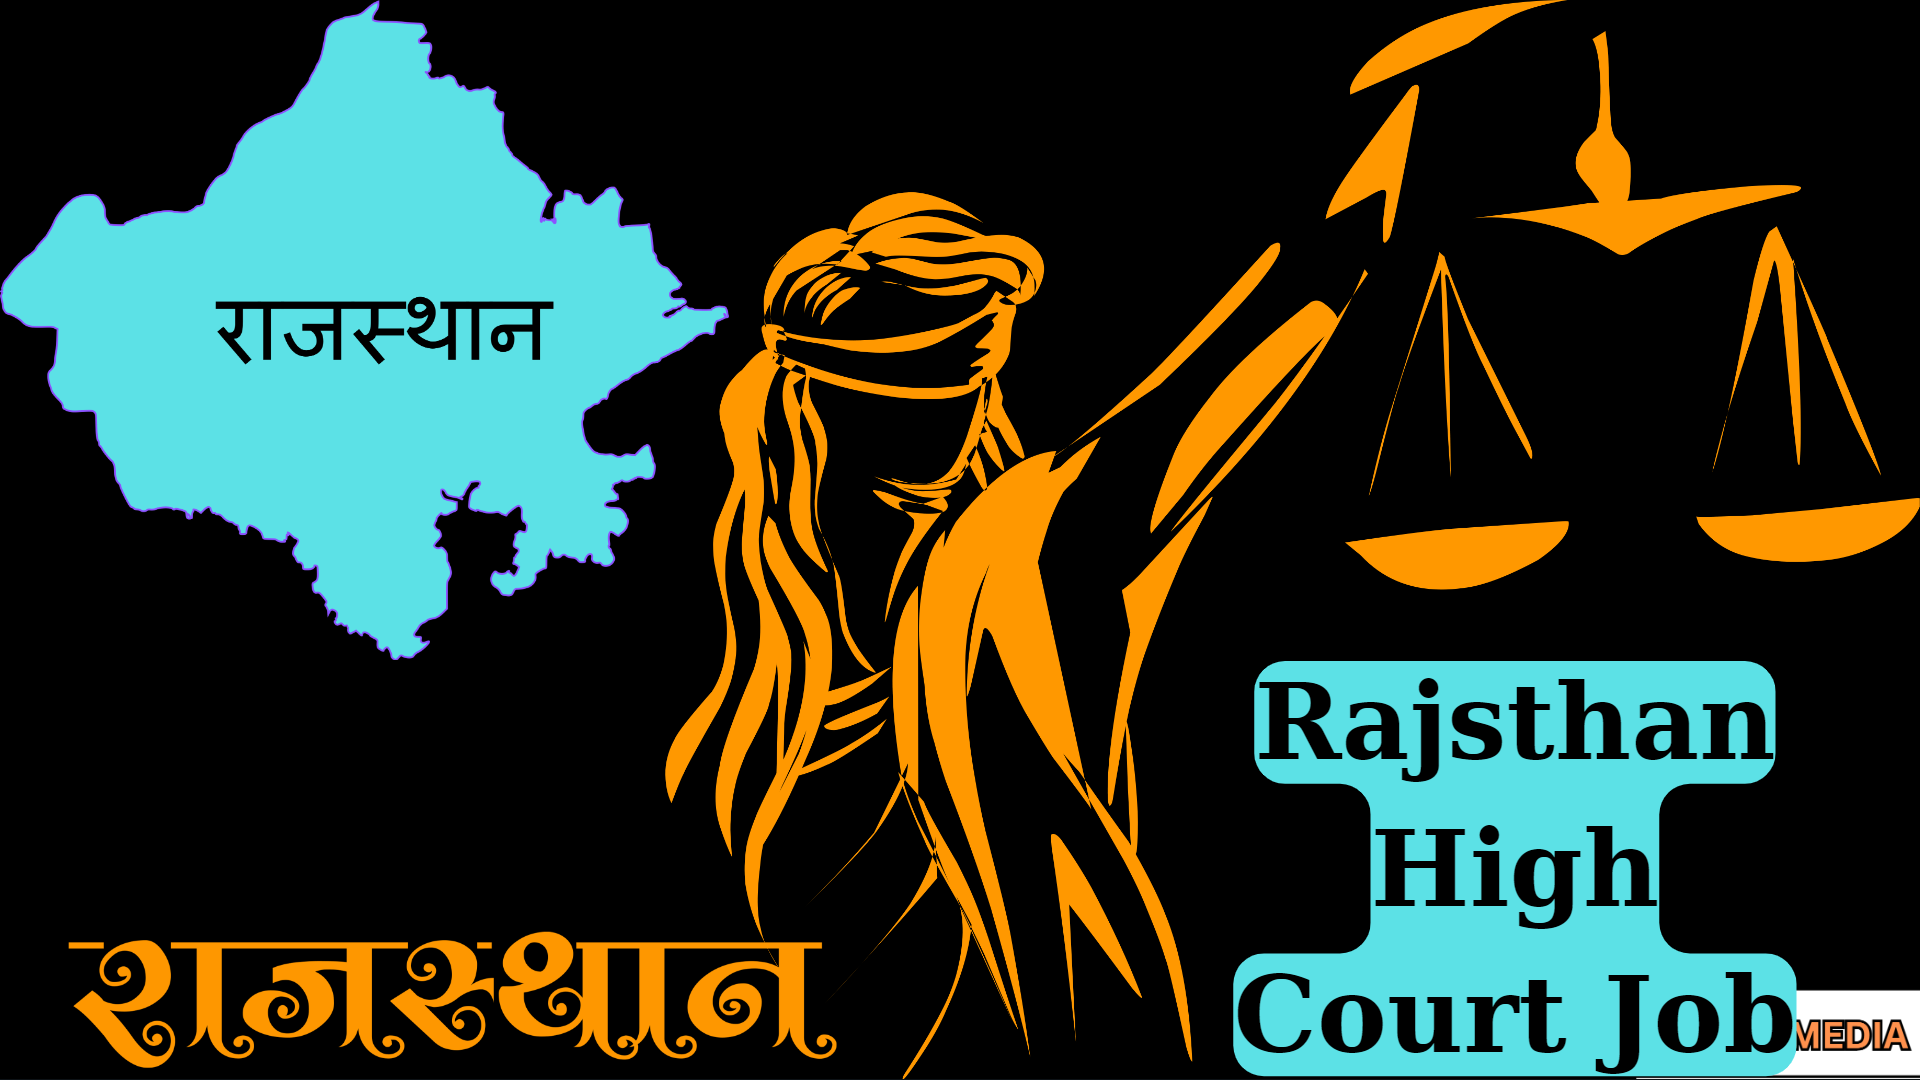 Rajasthan High Court Job